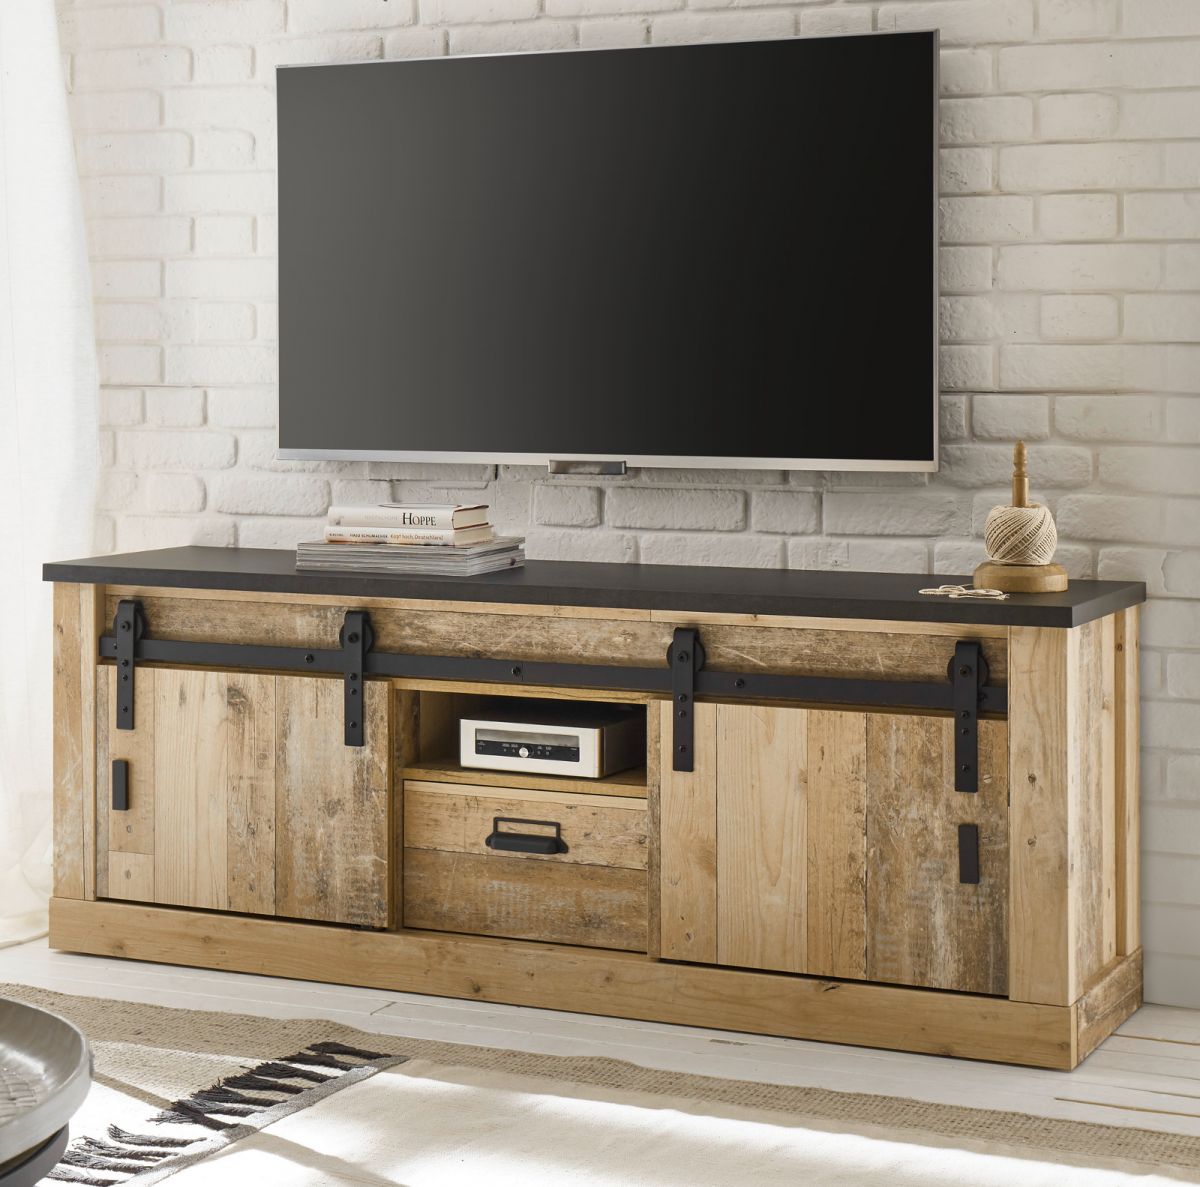 TV-Lowboard Stove in Used Wood hell und anthrazit TV Unterteil in Komforthöhe 162 x 61 cm